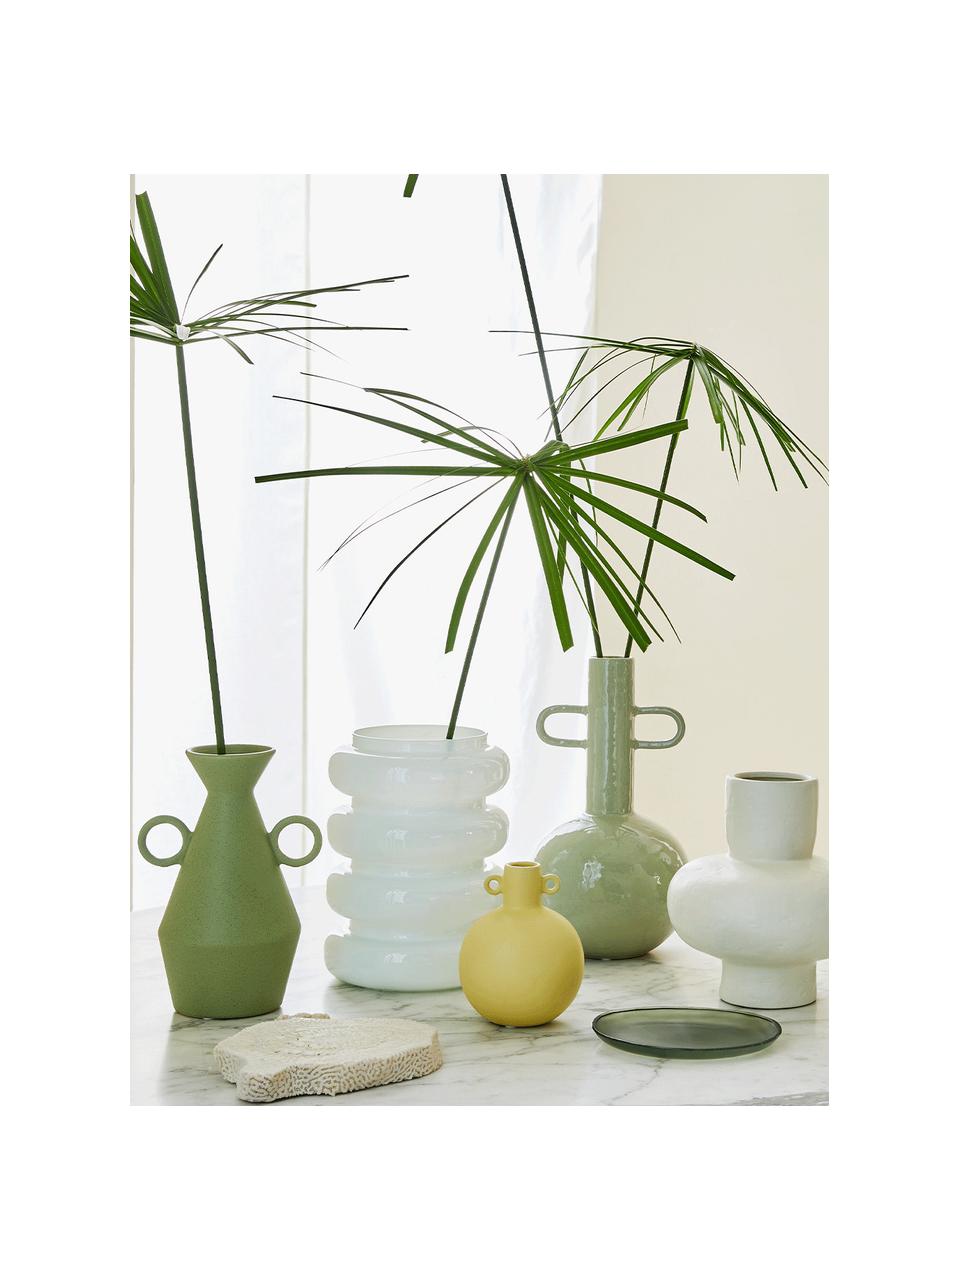 Design-Vase Bulb aus recyceltem Glas, 25 cm, Glas, Weiß, Ø 19 x H 25 cm